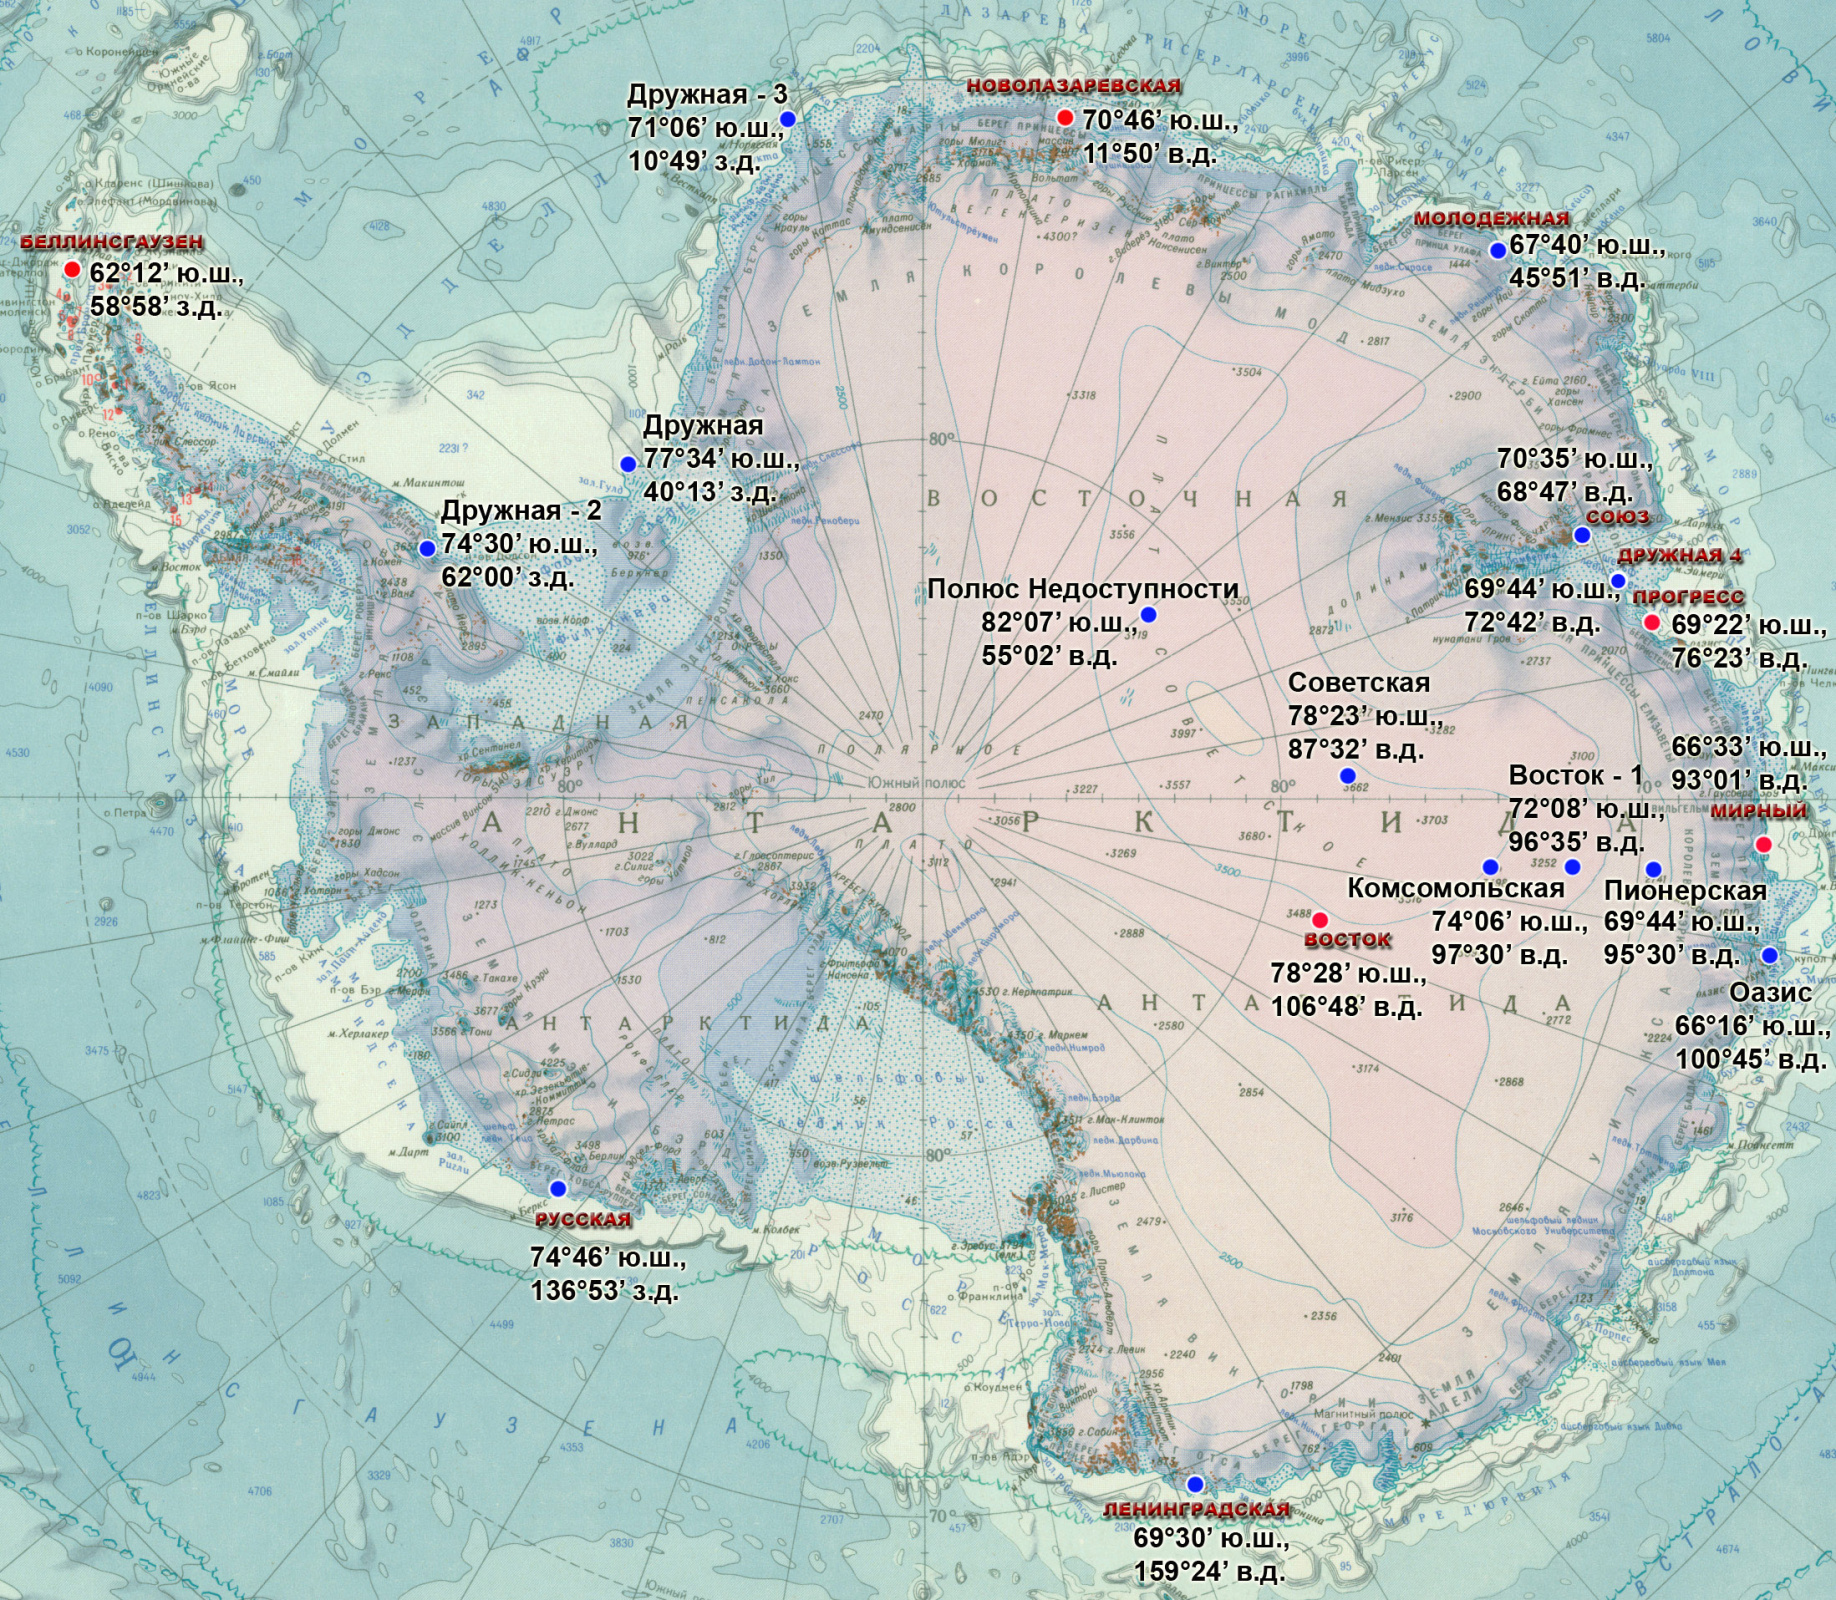 В середине 20 века антарктида. Антарктида станция полюс недоступности на карте. Станция Прогресс в Антарктиде на карте. Южный полюс, полюс недоступности. На карте Антарктиды. Южный полюс недоступности Антарктиды на карте.